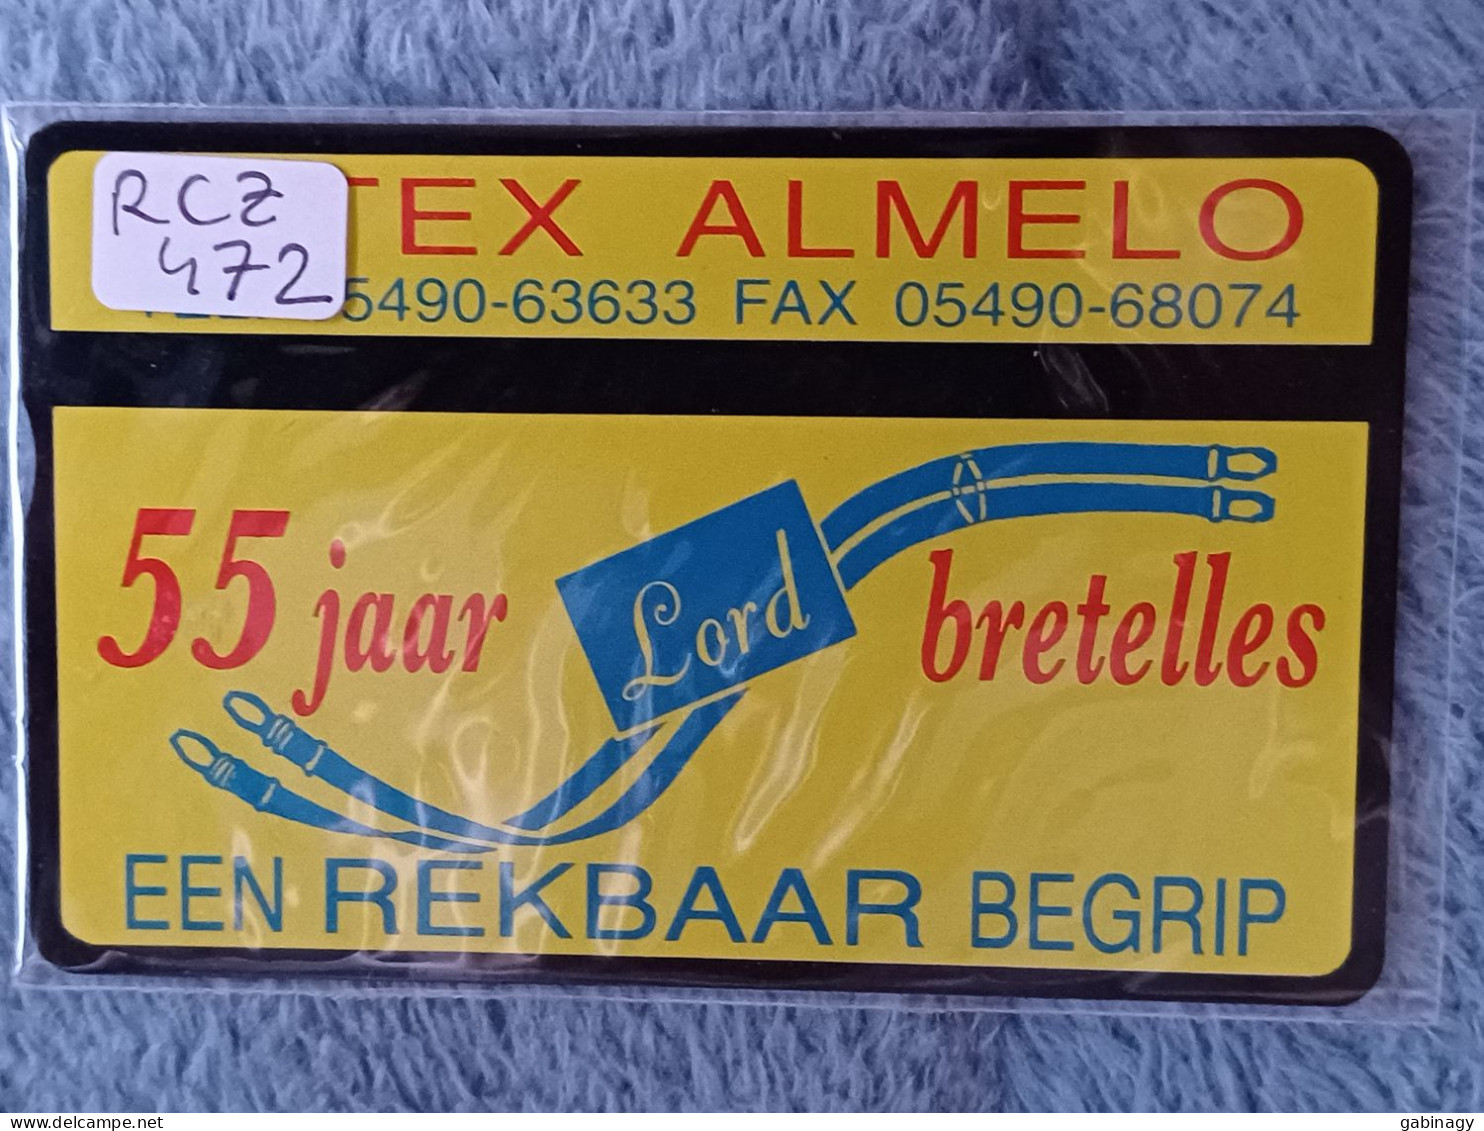 NETHERLANDS - RCZ472 - Eltex Almelo 55 Jaar Lord Bretelles - 1.030EX. - Private